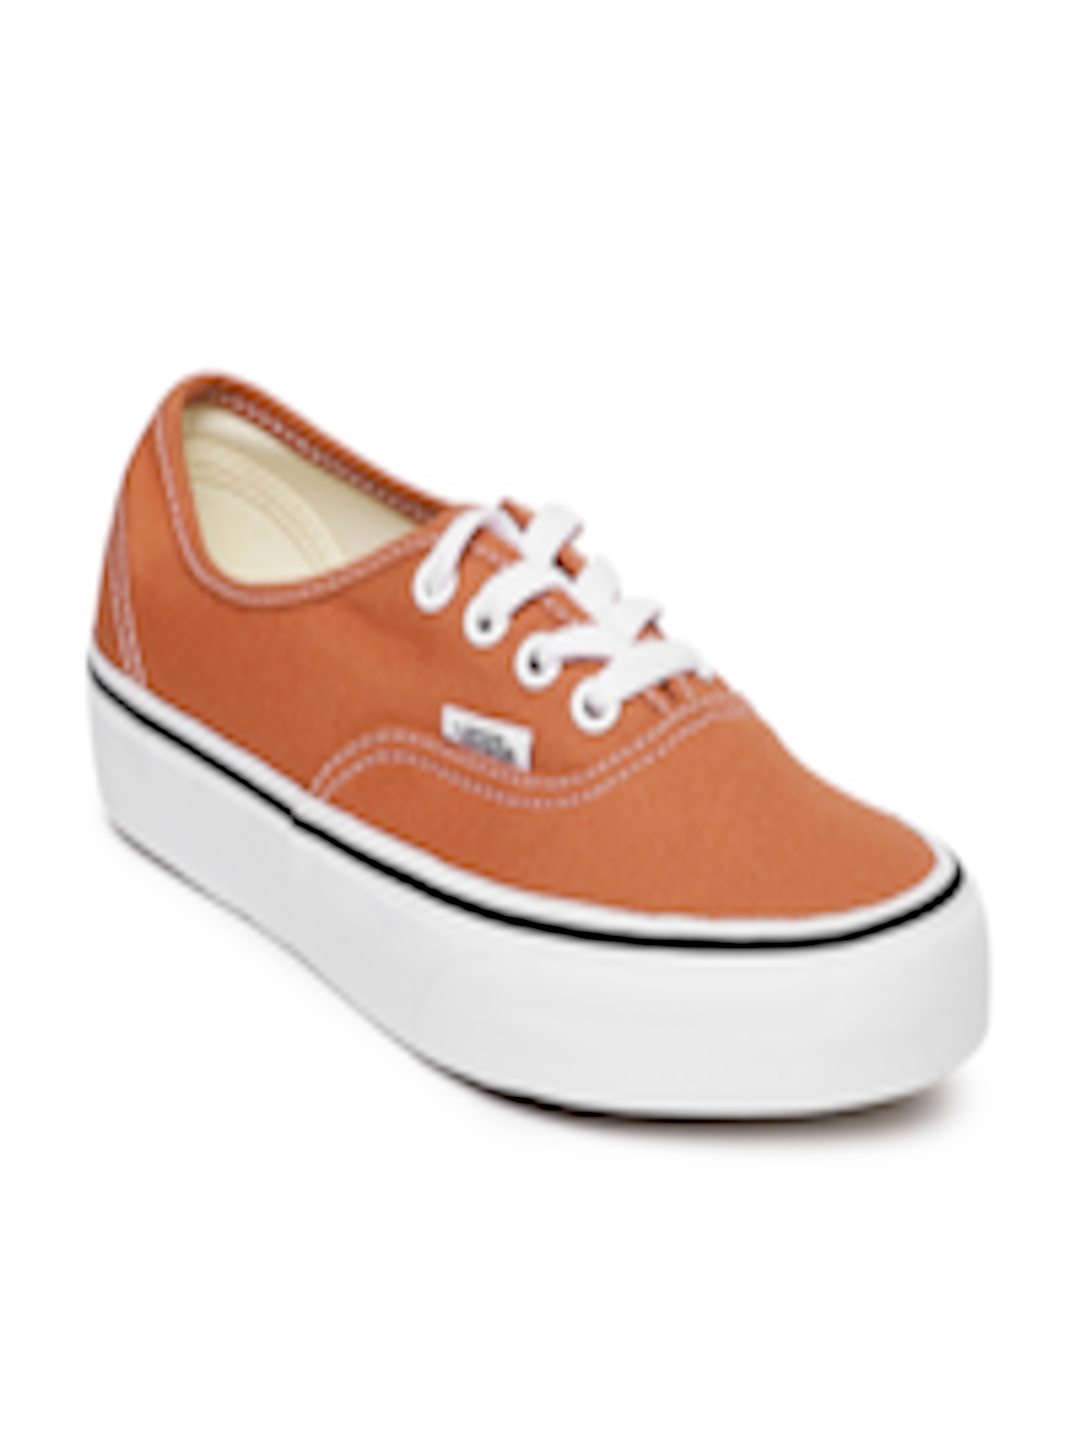 Buy Vans Unisex Orange Authentic Sneakers Casual Shoes